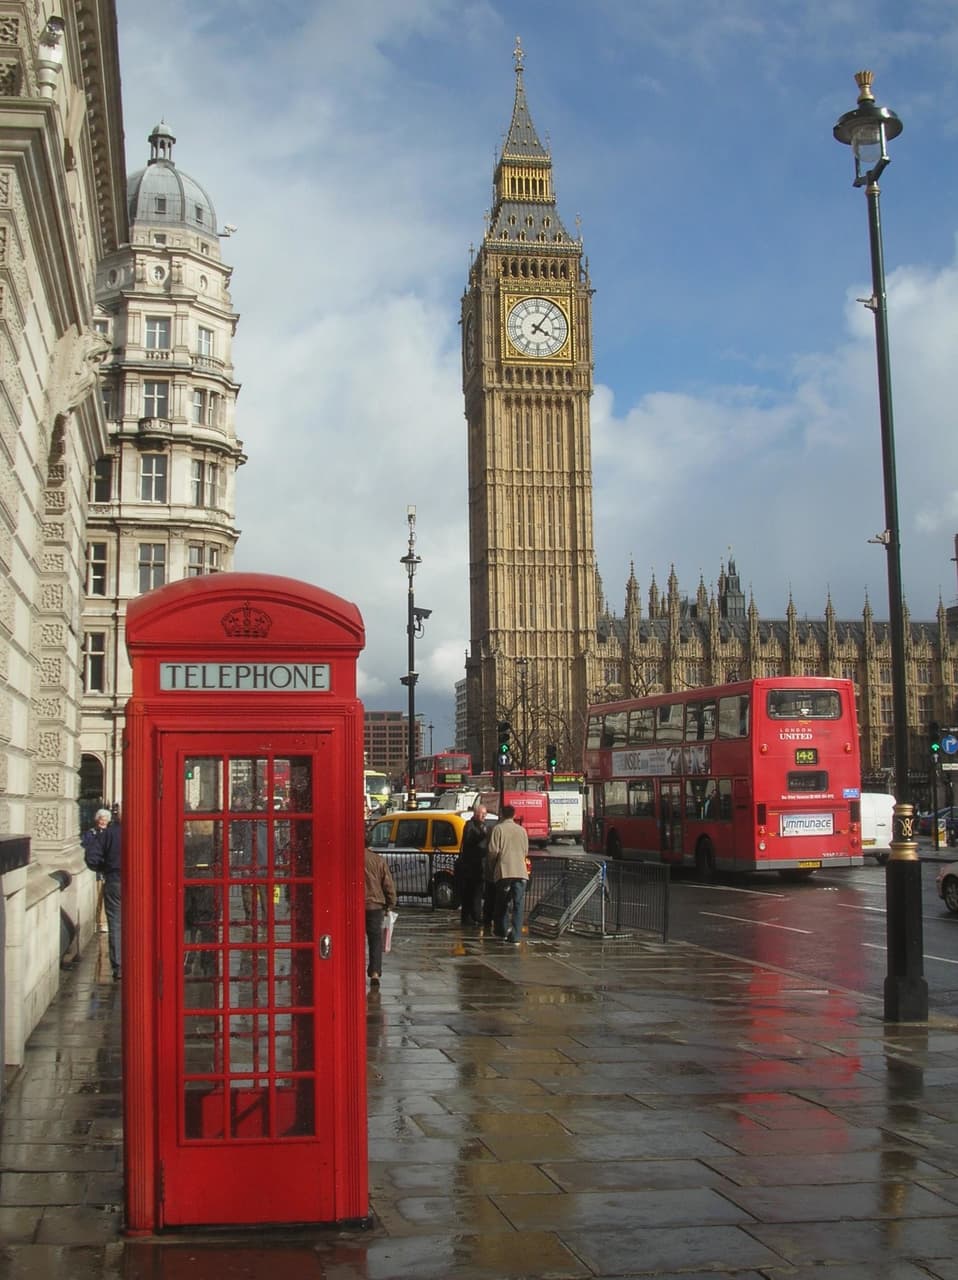 London, Big Ben, And Telephone Image - Big Ben - HD Wallpaper 